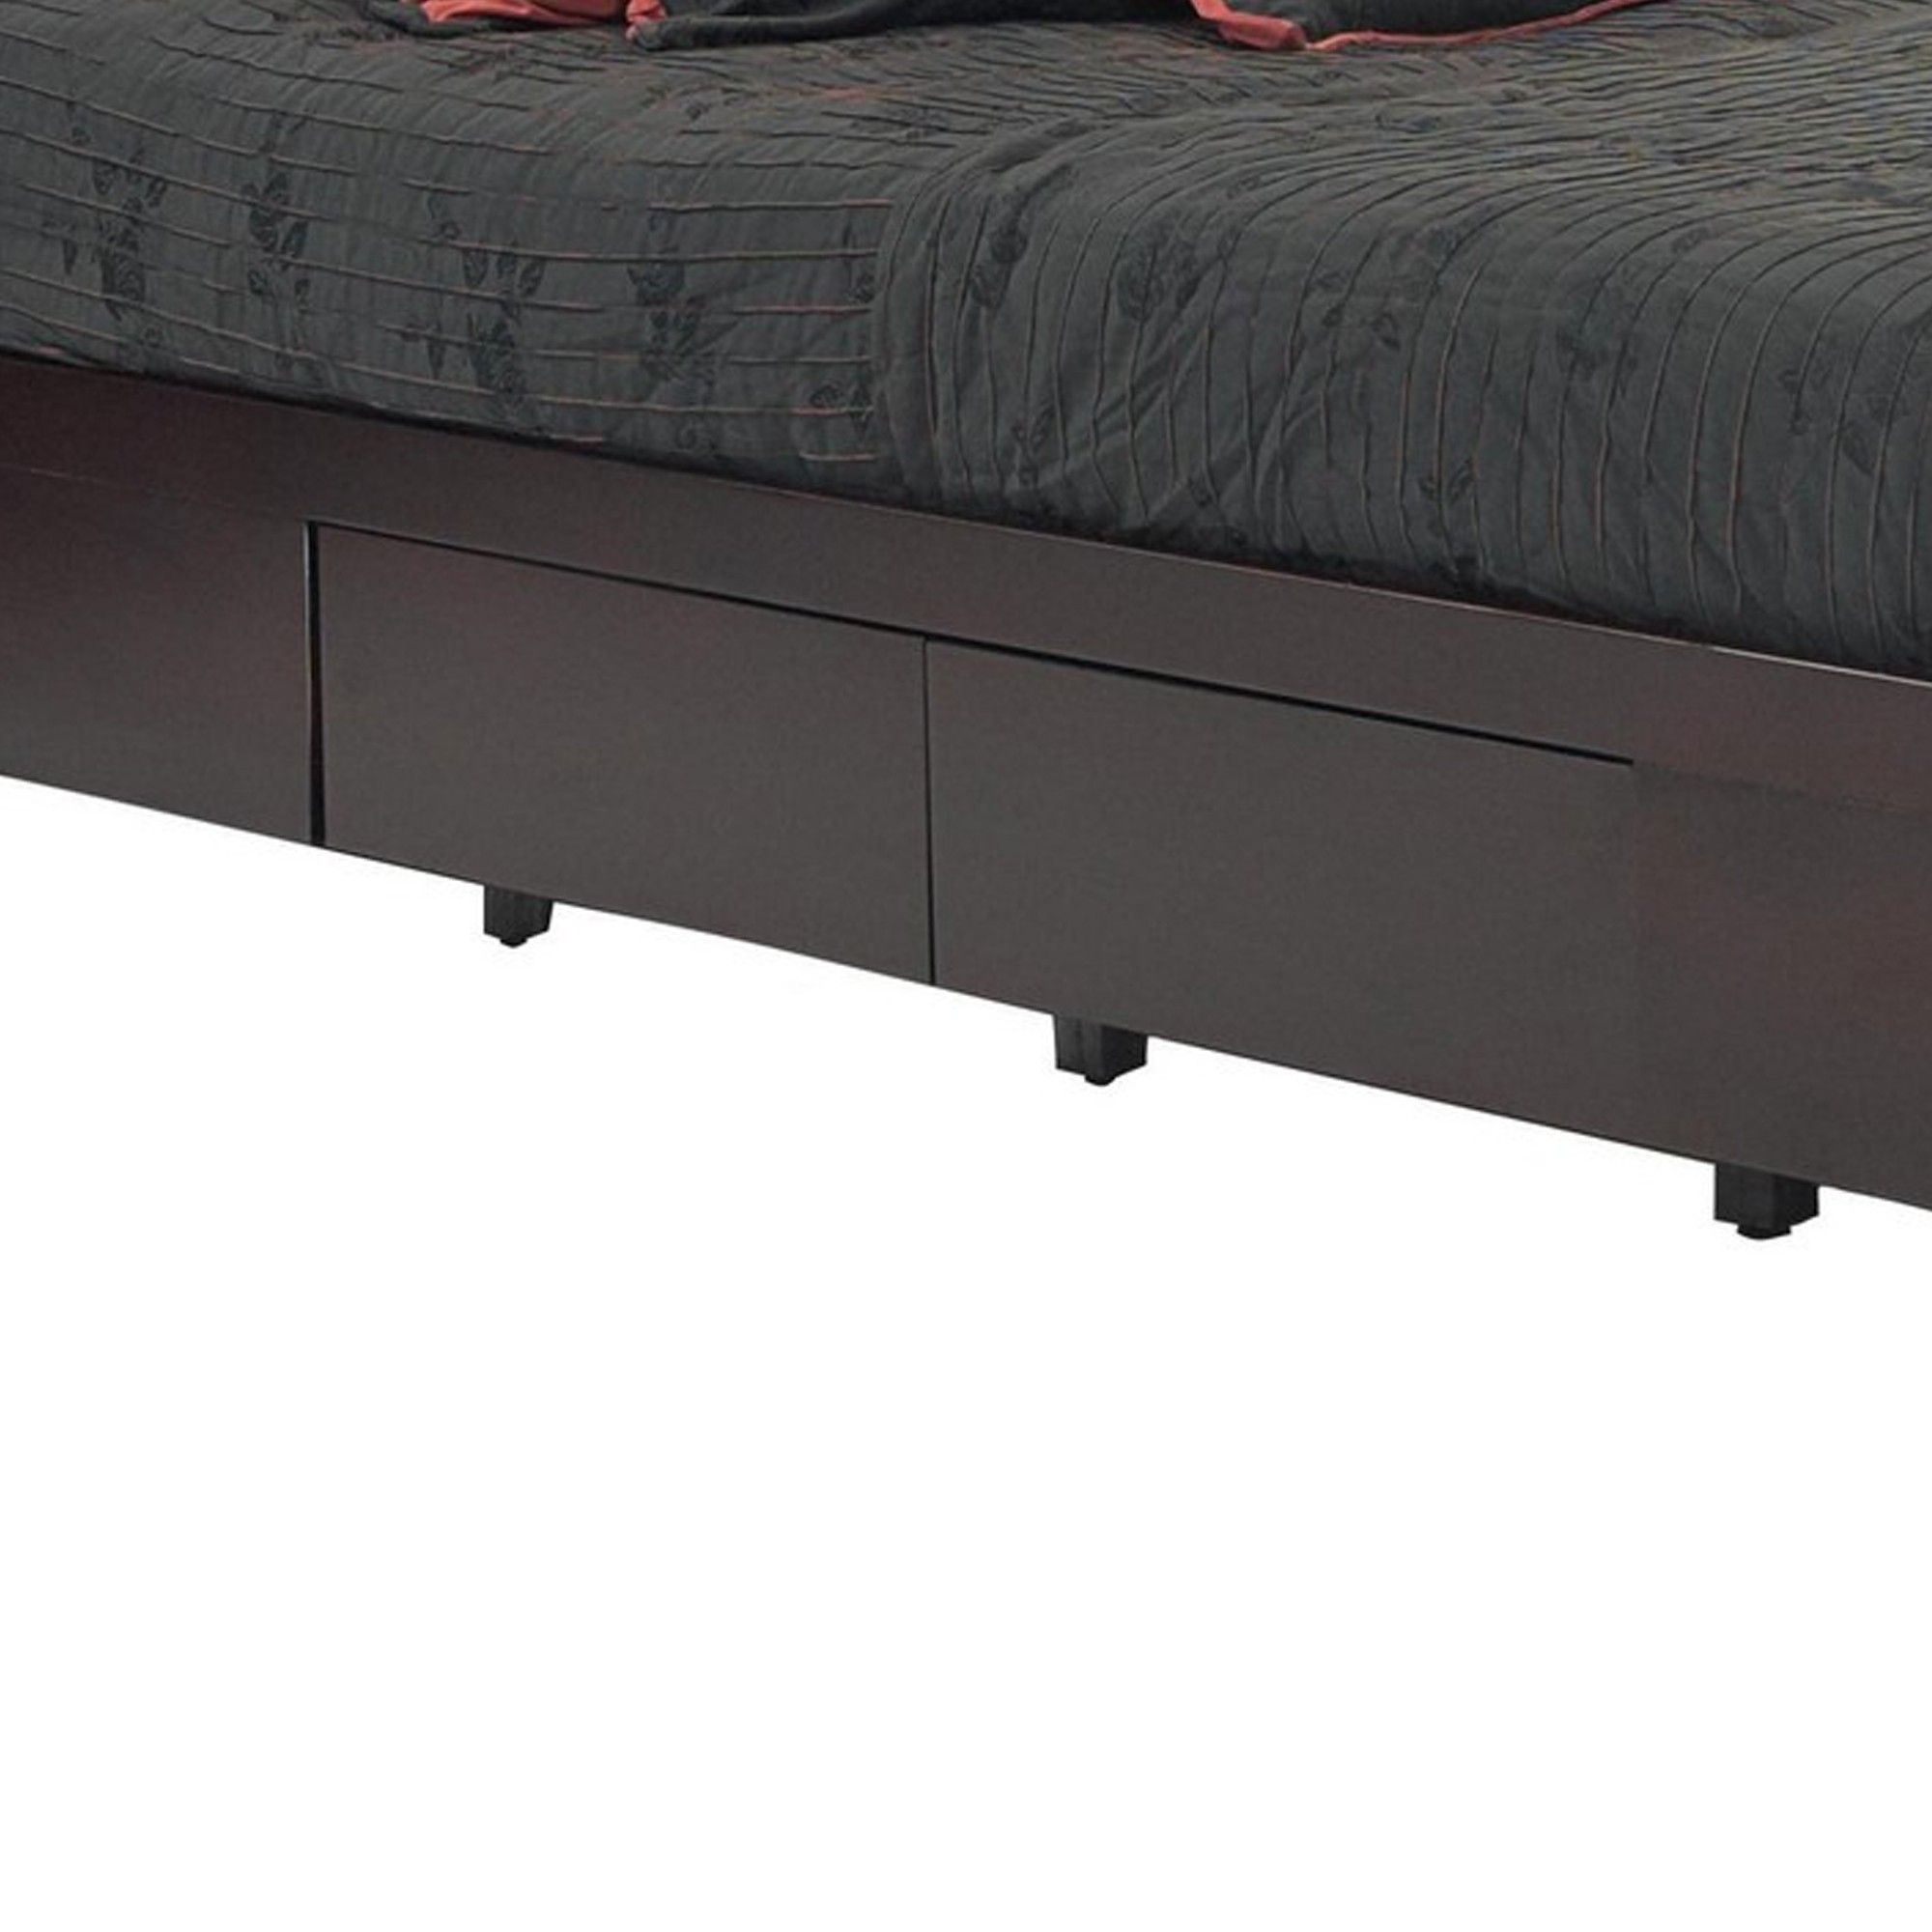 Klio King Size Bed, 4 Storage Drawers, Low Profile, Dark Brown Mahogany- Saltoro Sherpi